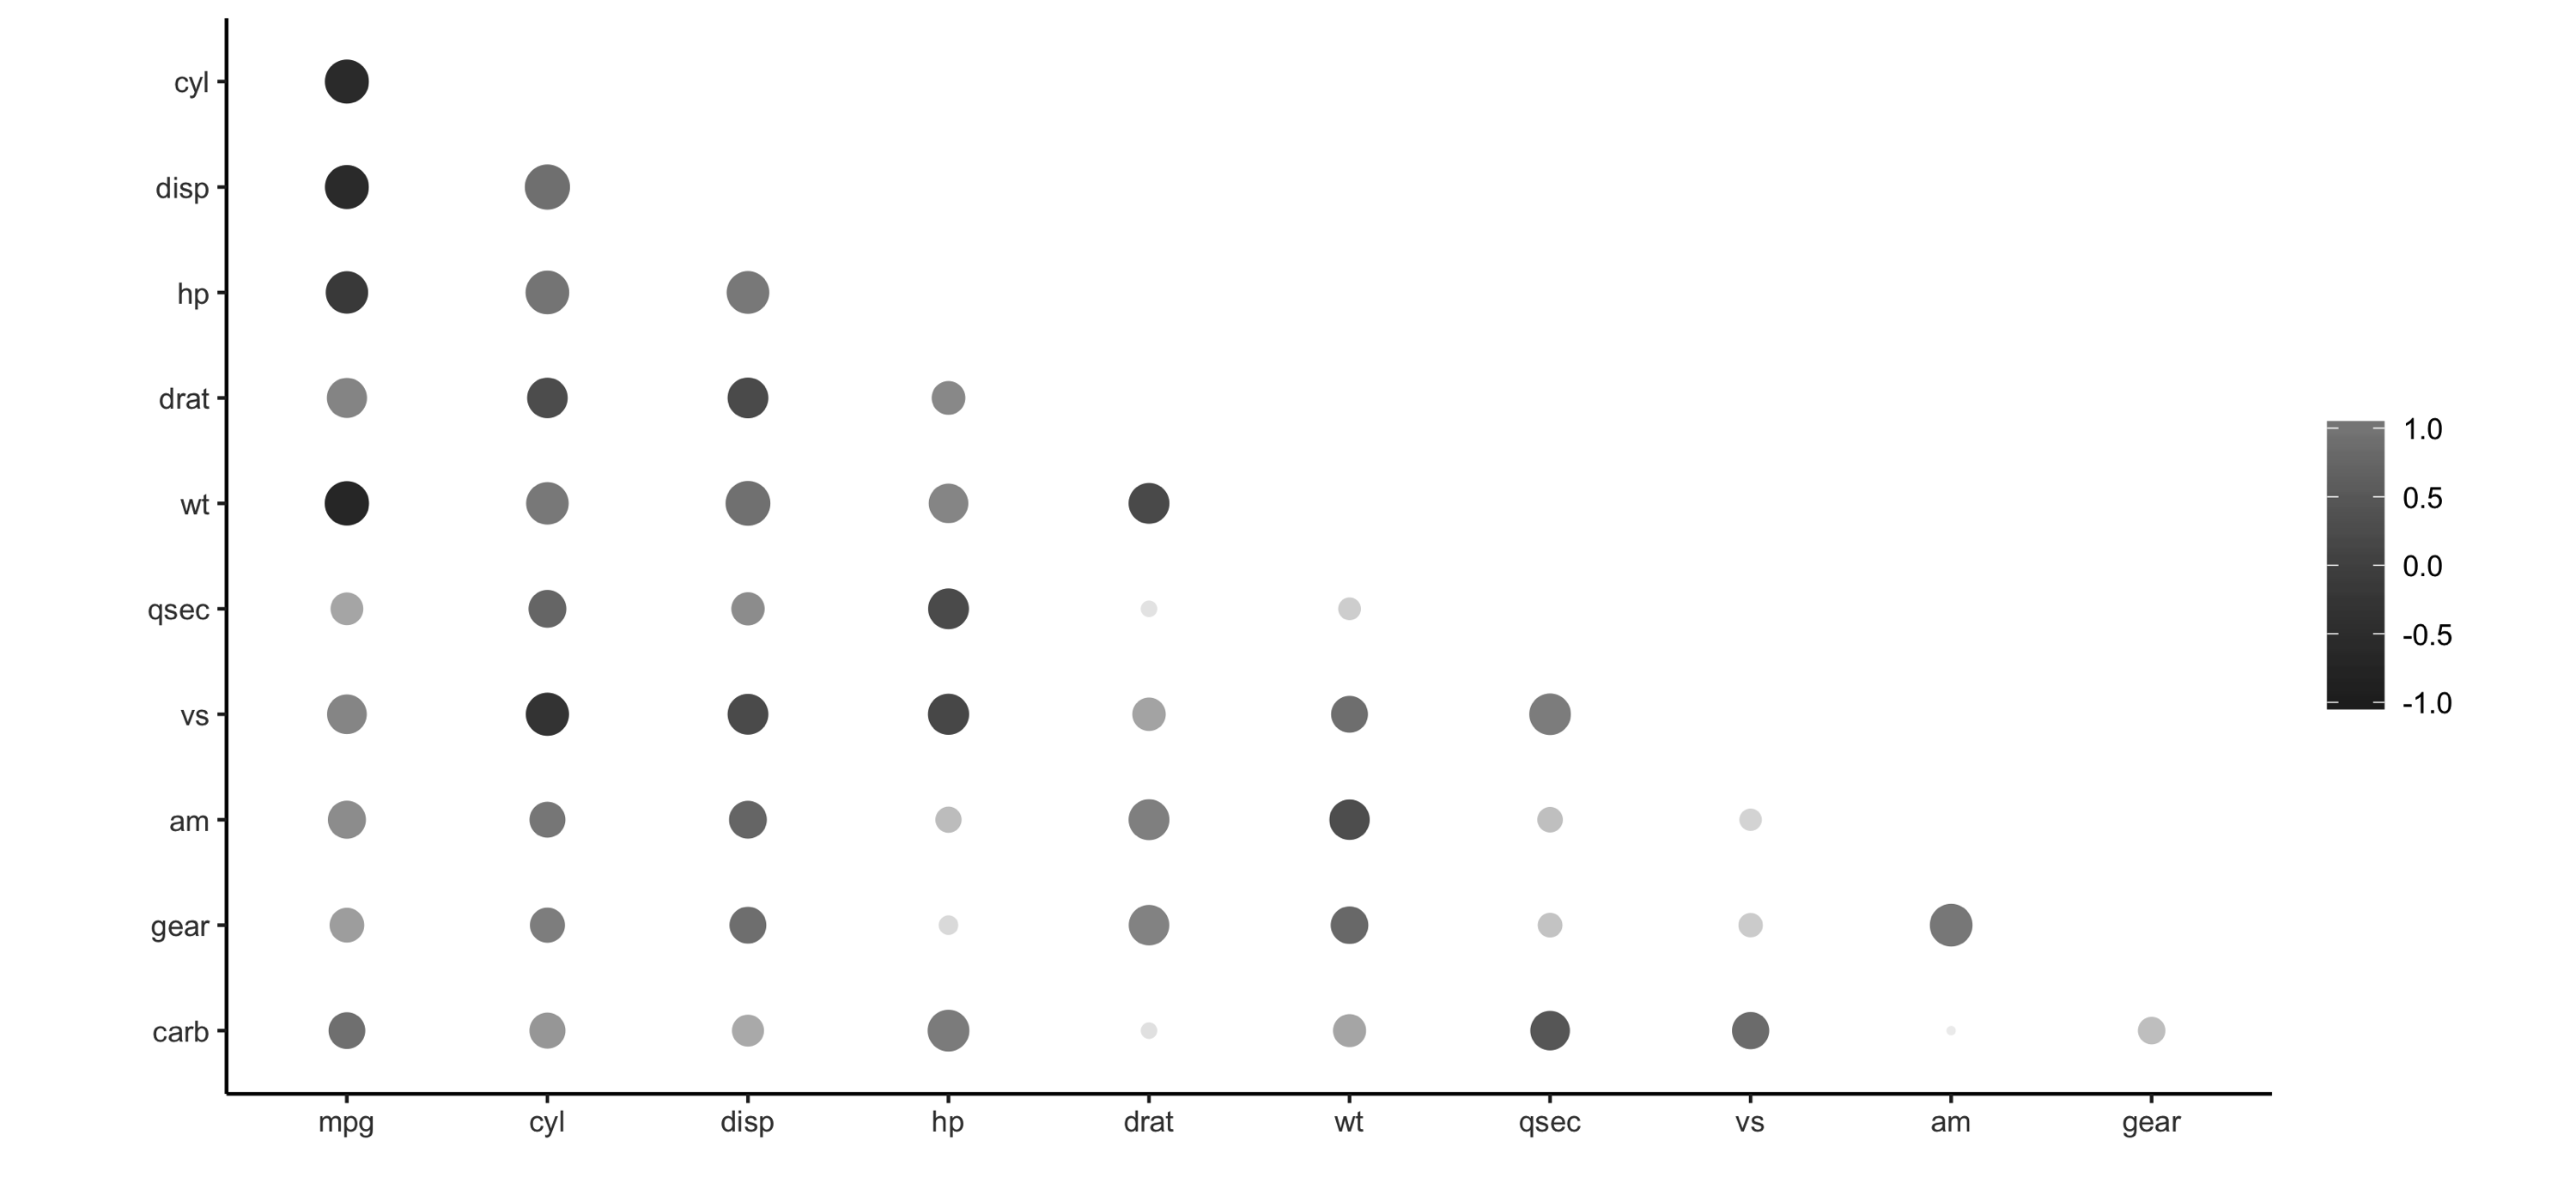 Using rplot() to visualize correlations